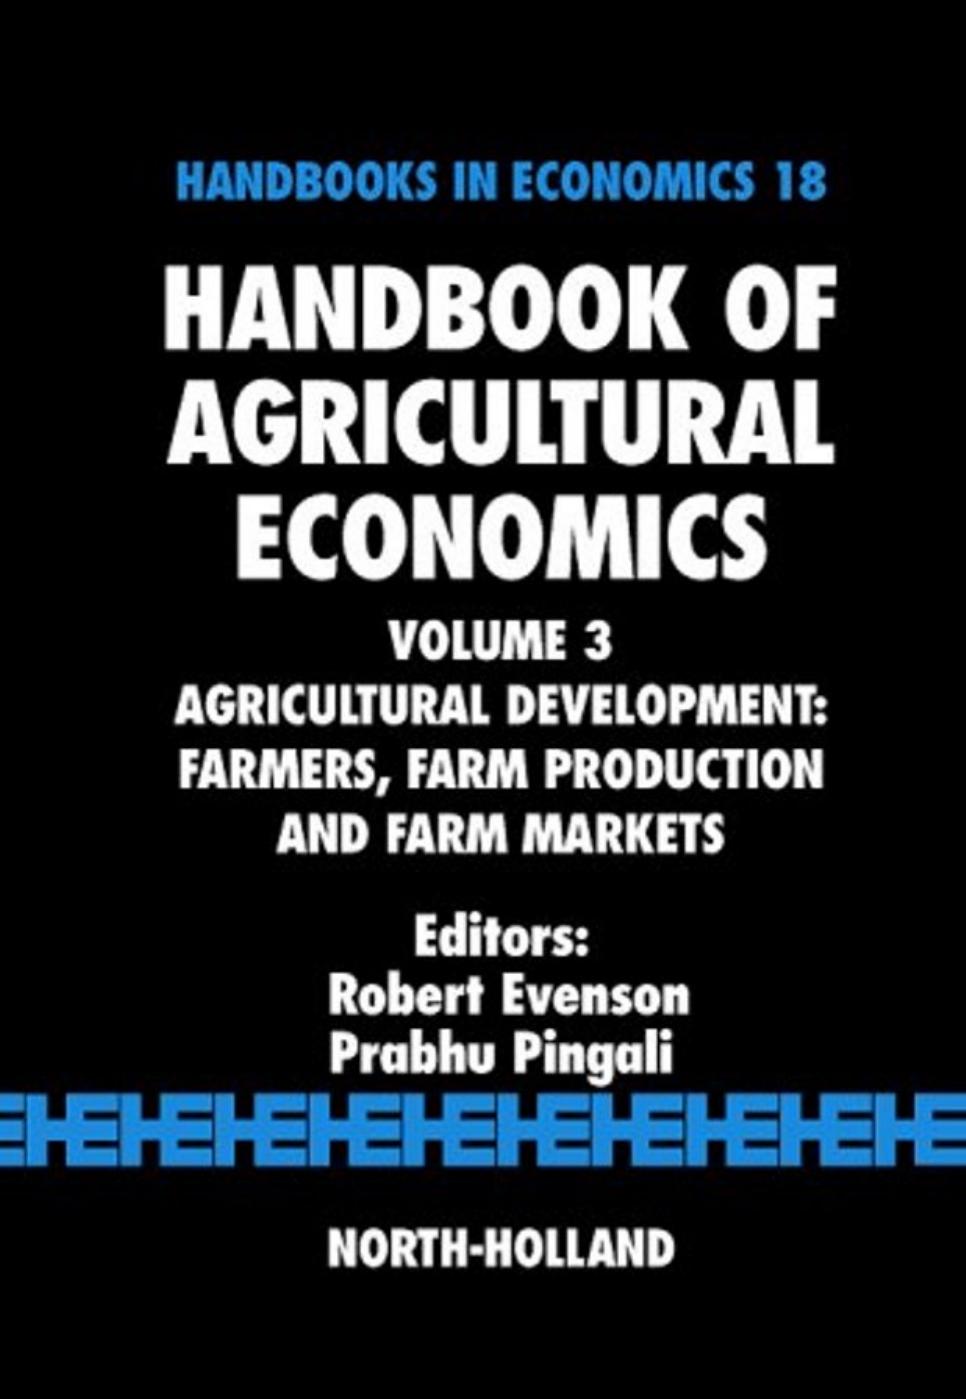 Agricultural Development; Farmers, Farm Production and Farm Markets; Vol 3 in Handbook of Agricultural Economics; Volume 18 of Handbooks in Economics